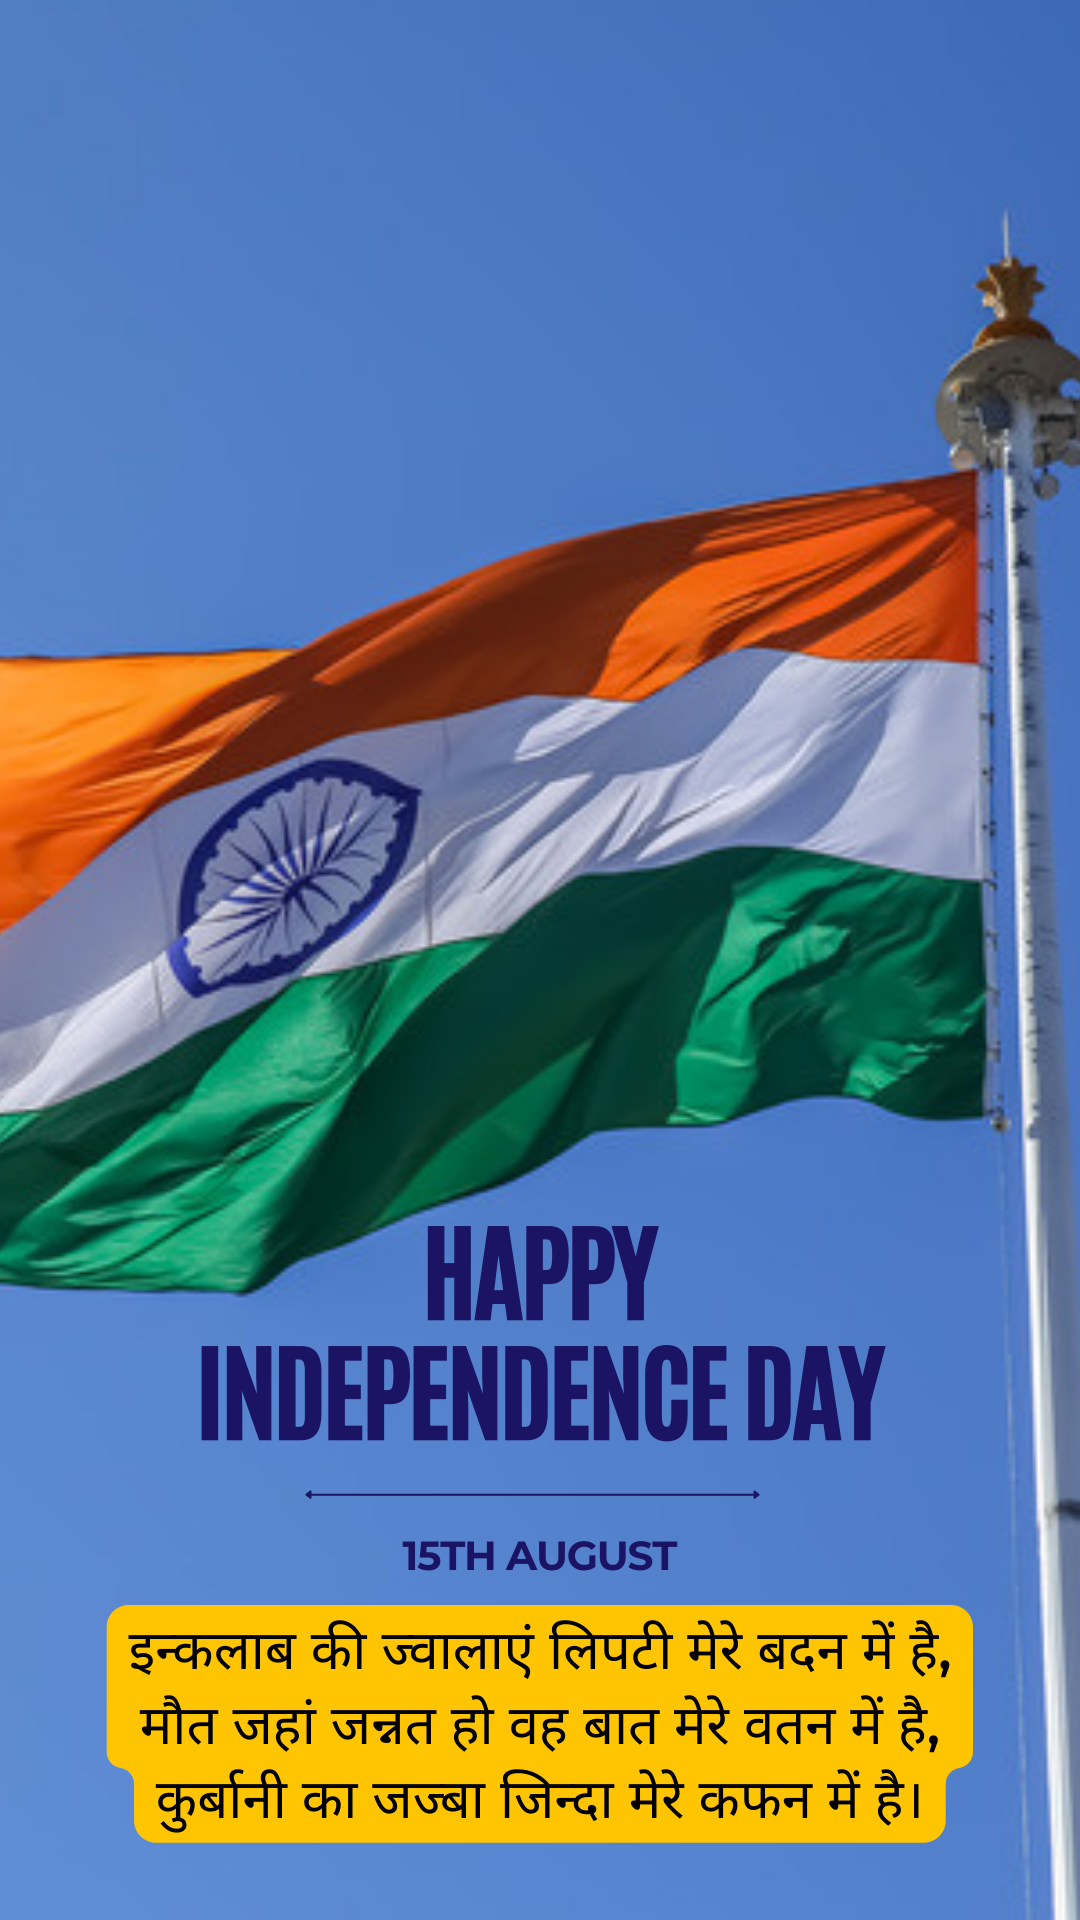 Happy Independence Day Wishesयह स कर सवततरत दवस क शभकमन  सदश डउनलड आजद क द सबक बधई  Happy Independence Day 2022 Wishes  Quotes Images Messages Slogan In Hindi 